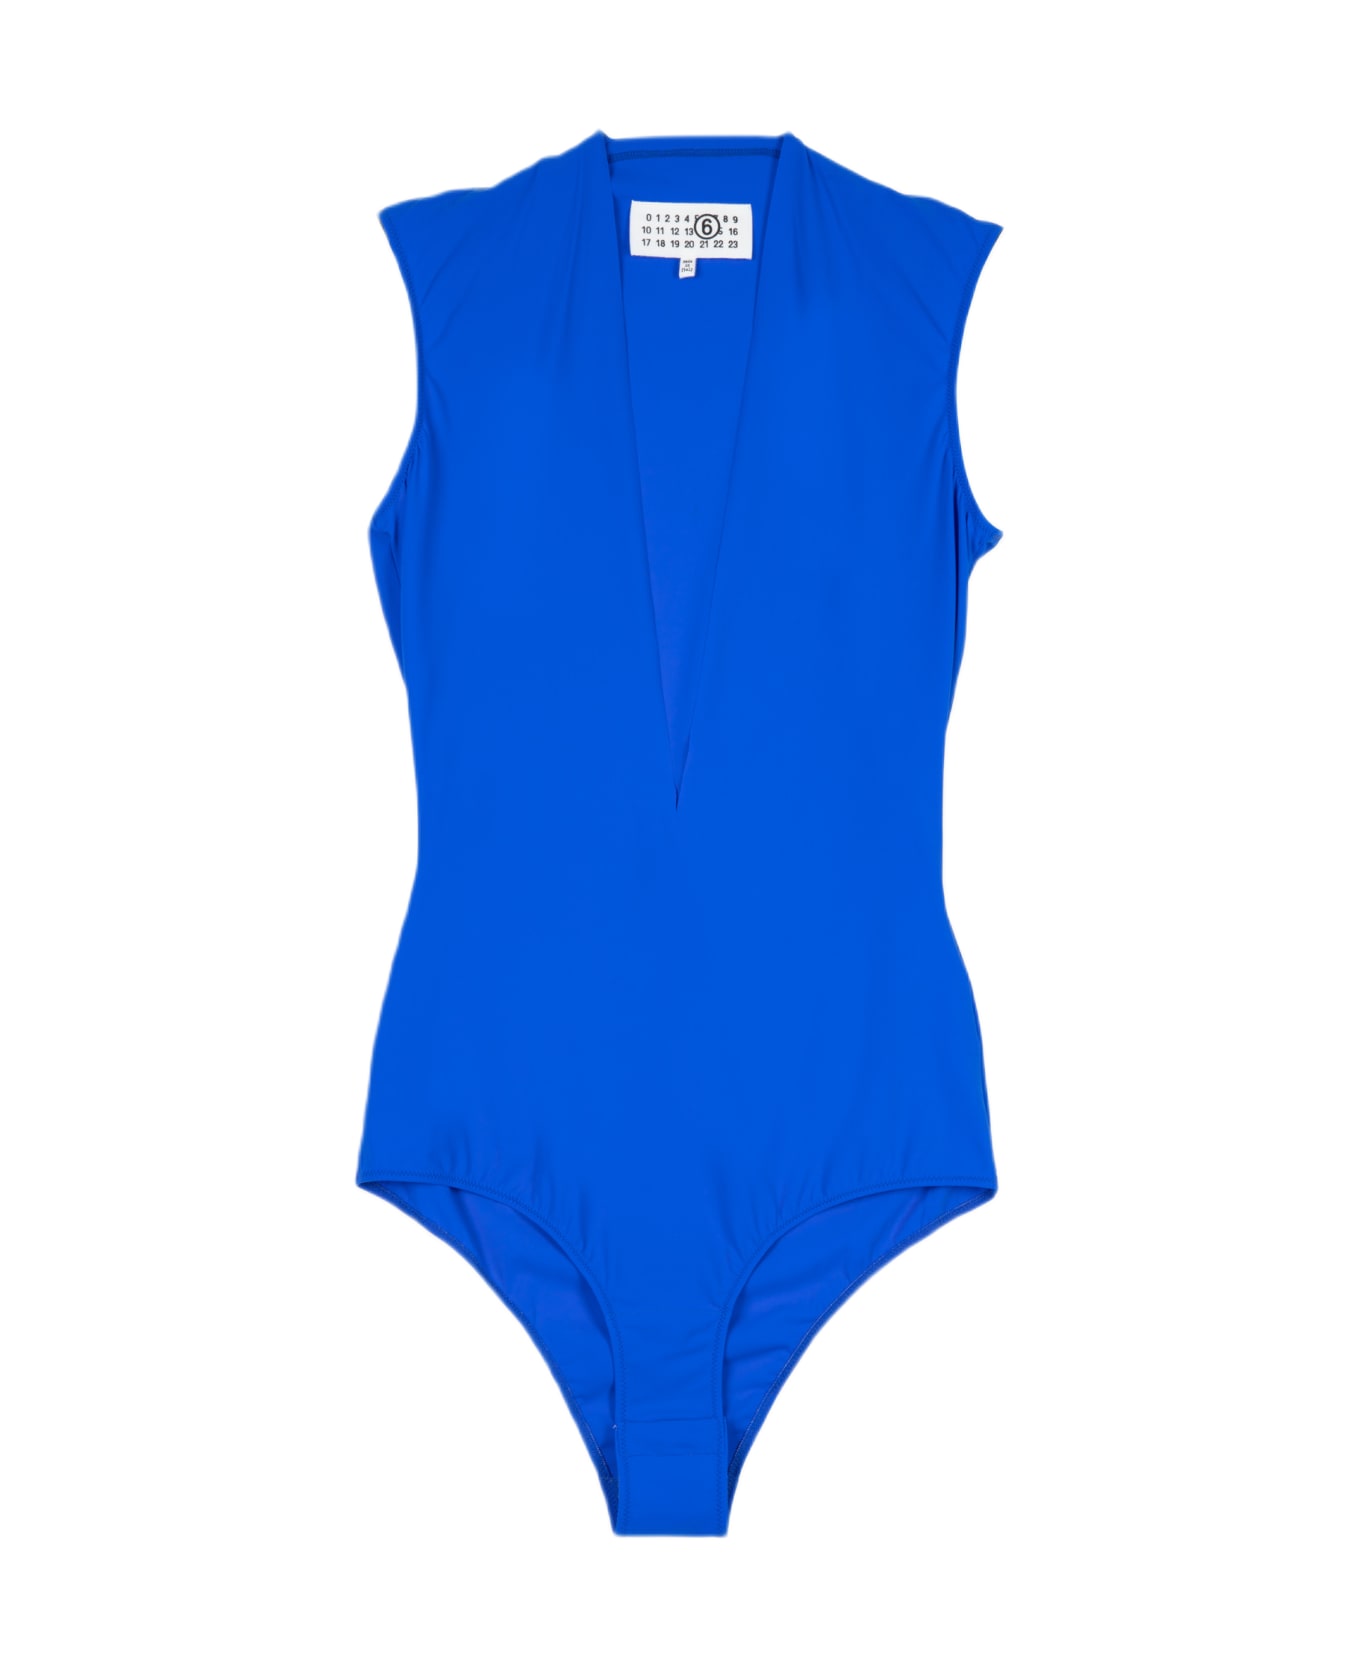 MM6 Maison Margiela Body Royal blue lycra v-ncek bodysuit - Blu